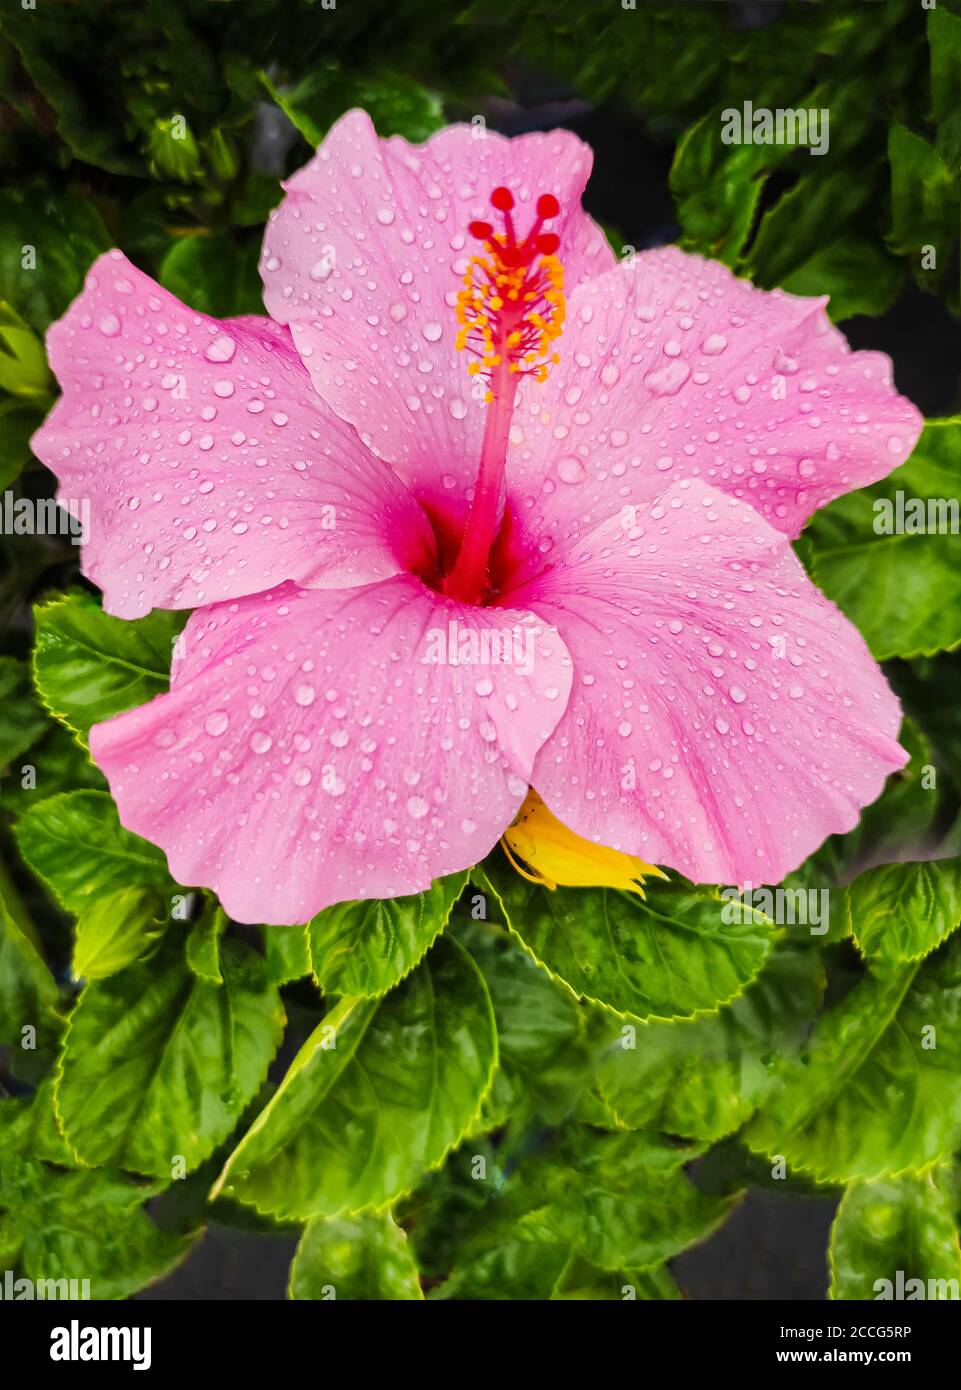 Hibiscus flower, close-up Stock Photo